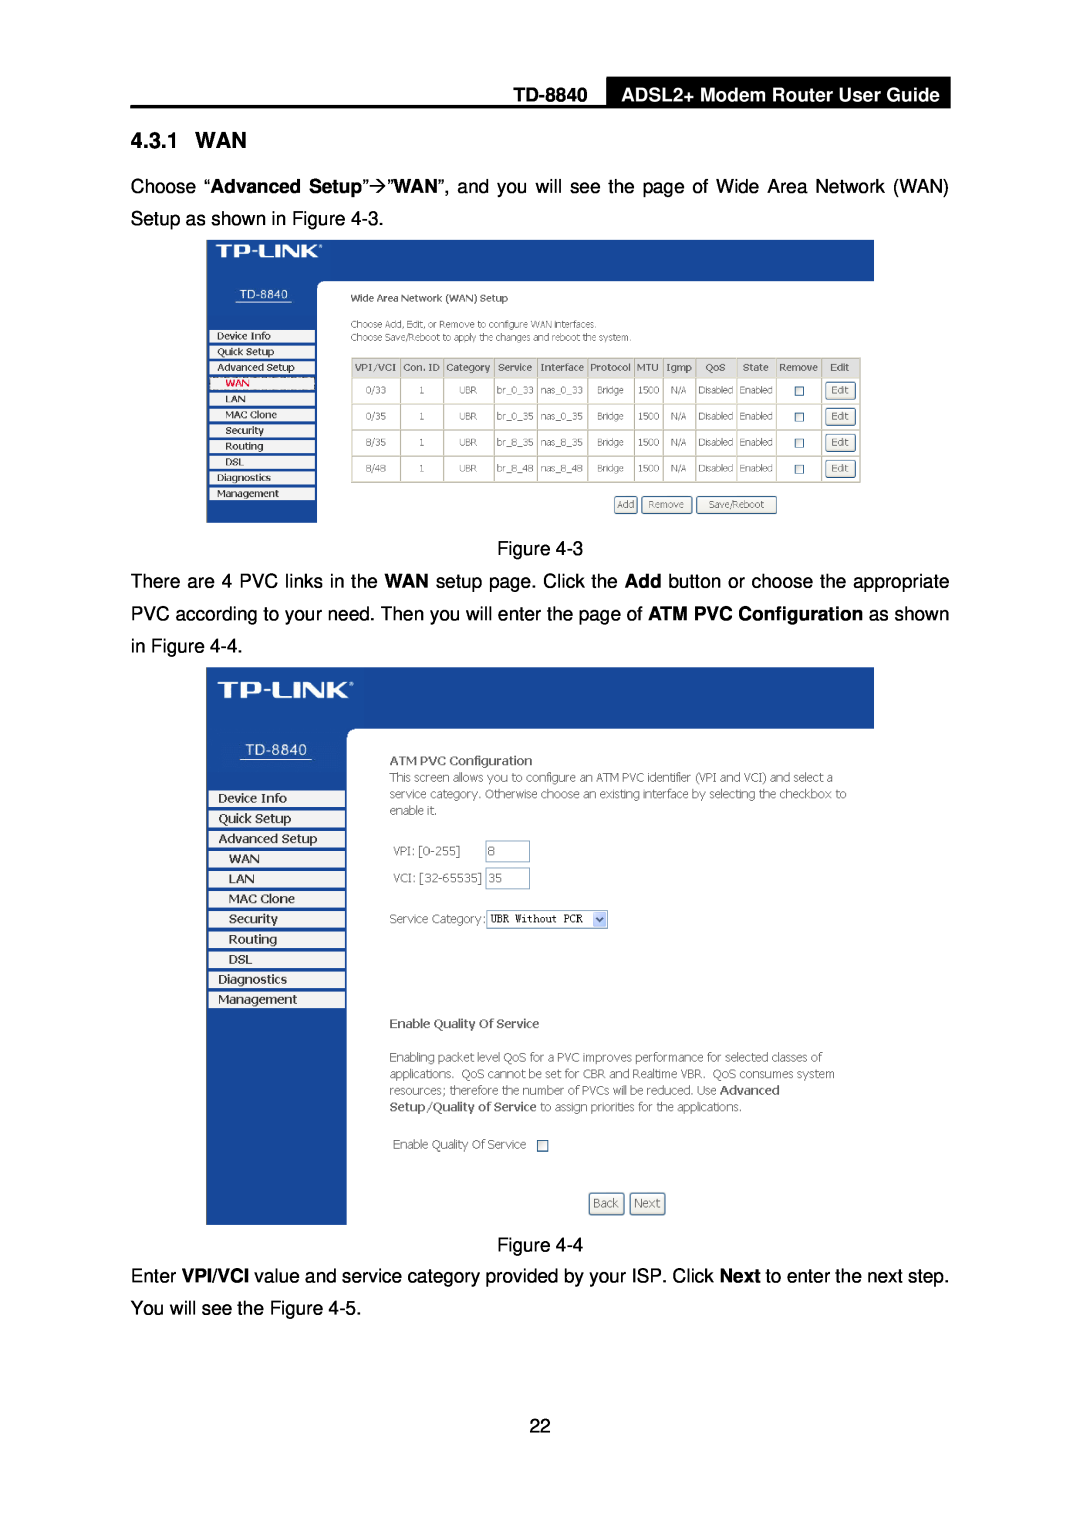 TP-Link TD-8840 manual 4.3.1 WAN, ADSL2+ Modem Router User Guide 